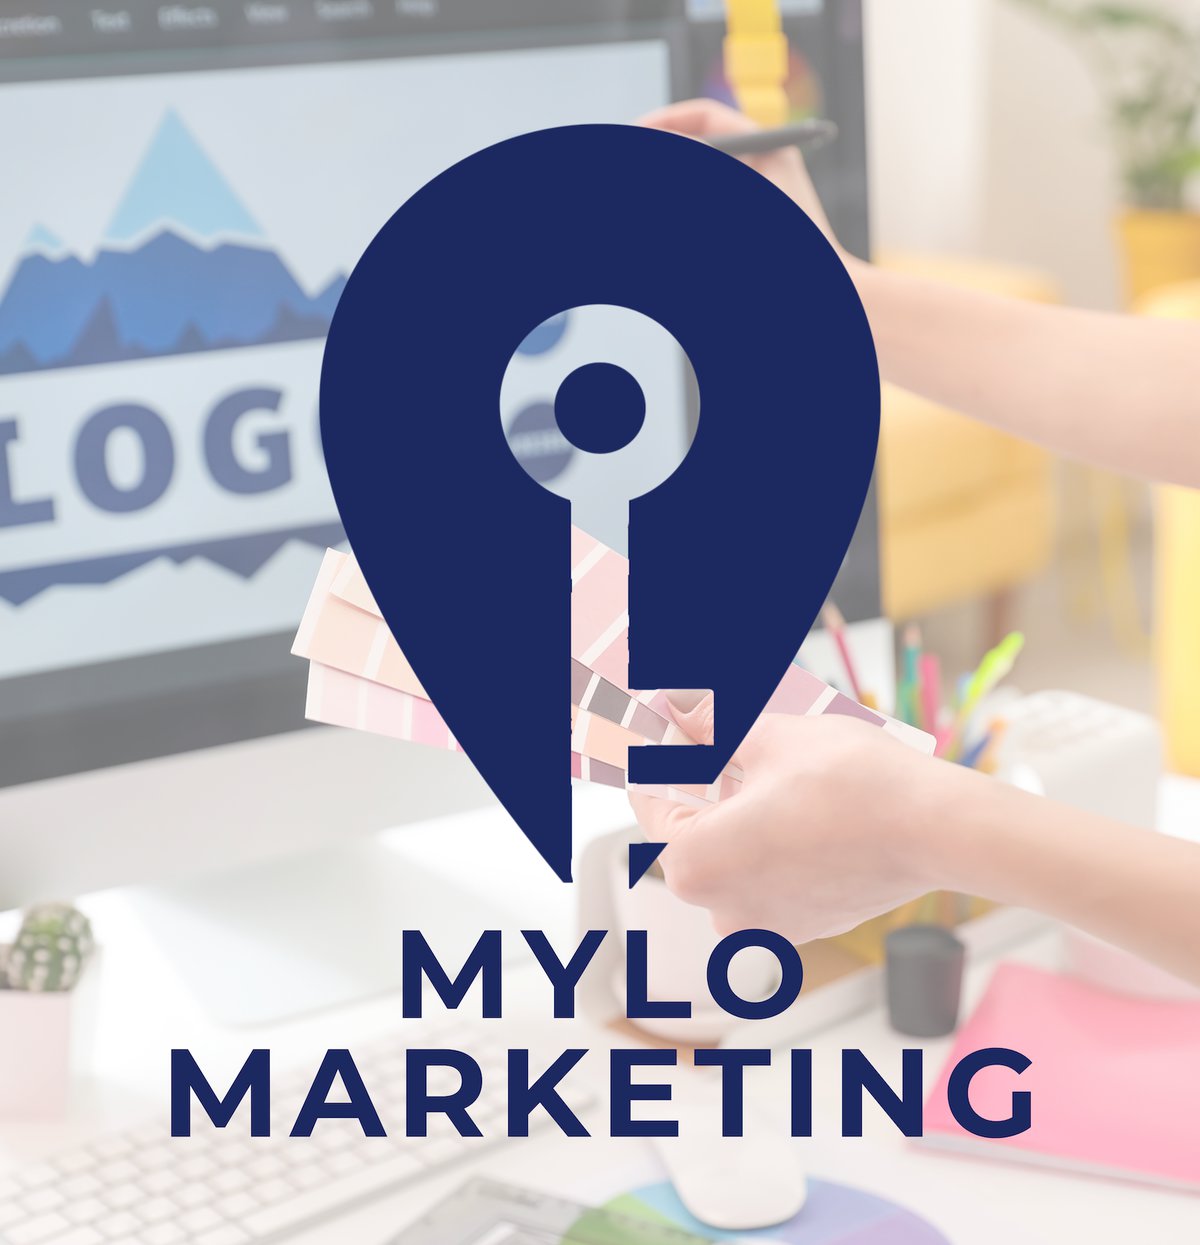 MyLo Marketing